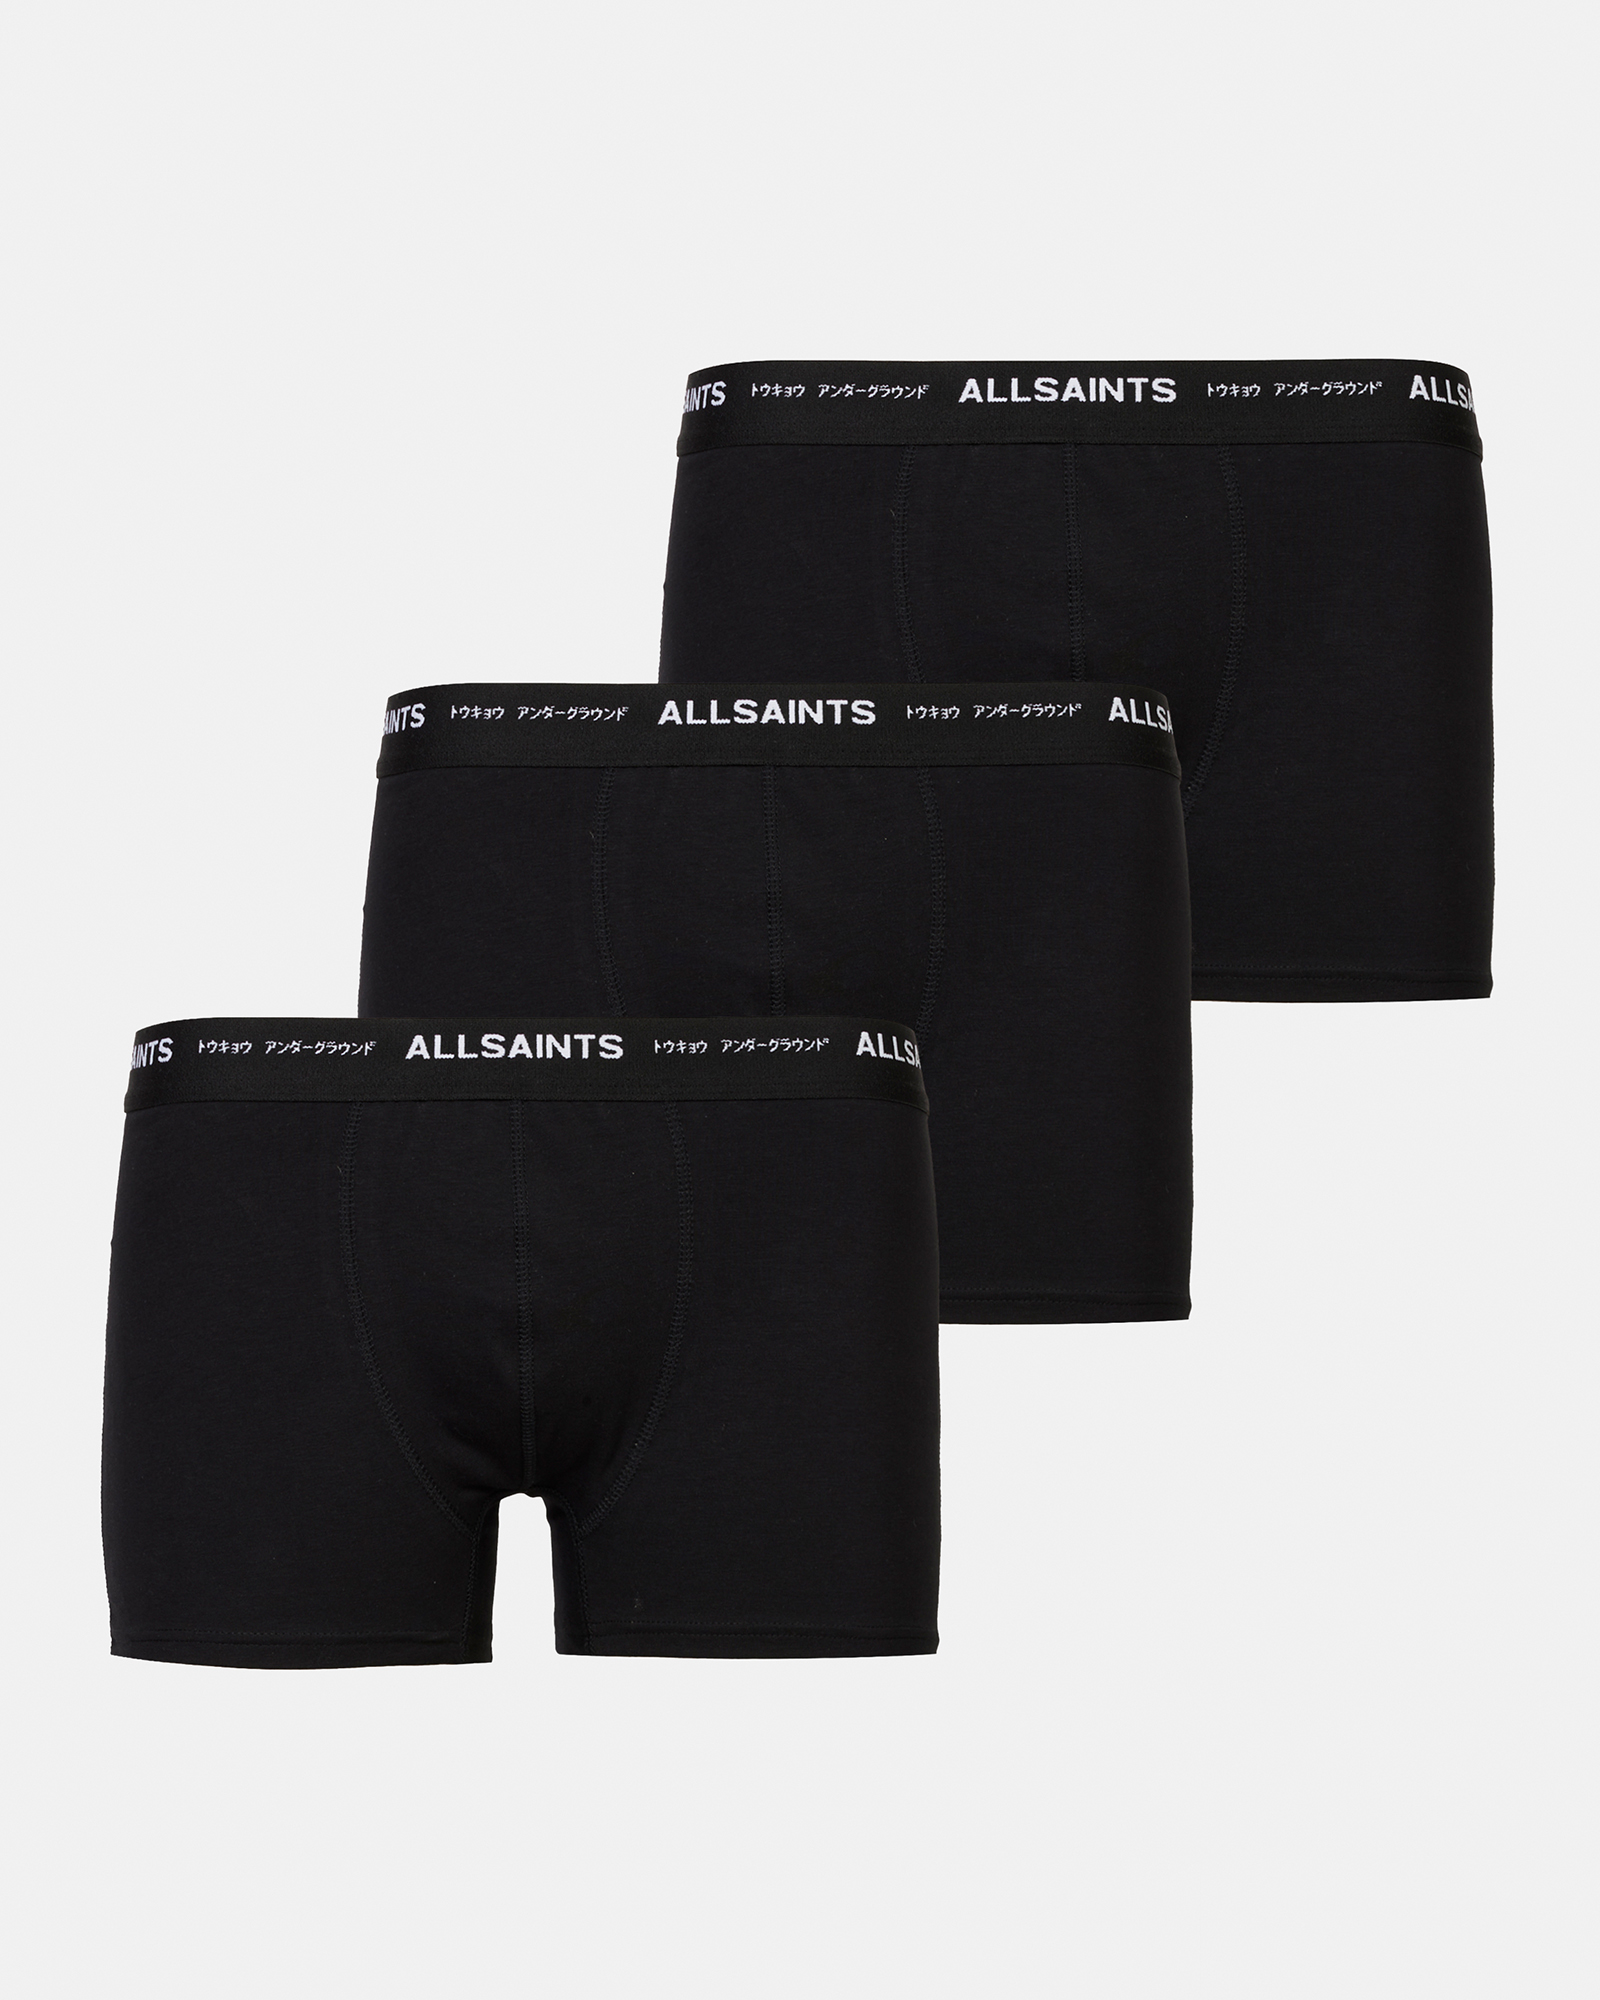 AllSaints 3-pack cotton trunks in black, green, off white